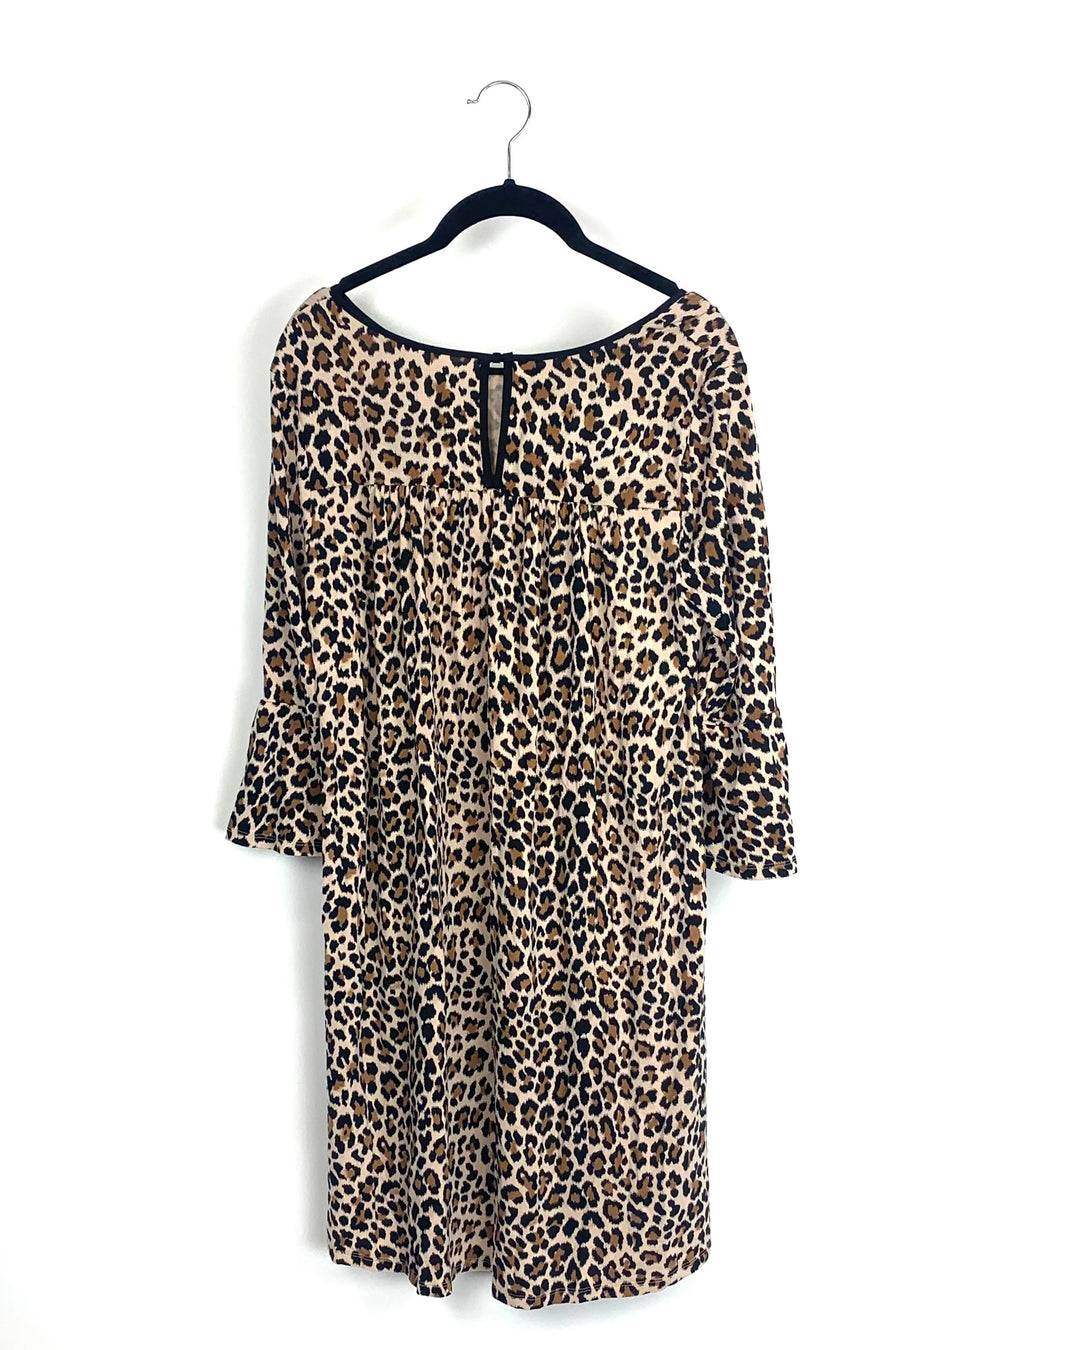 Cheetah Nightgown - Small